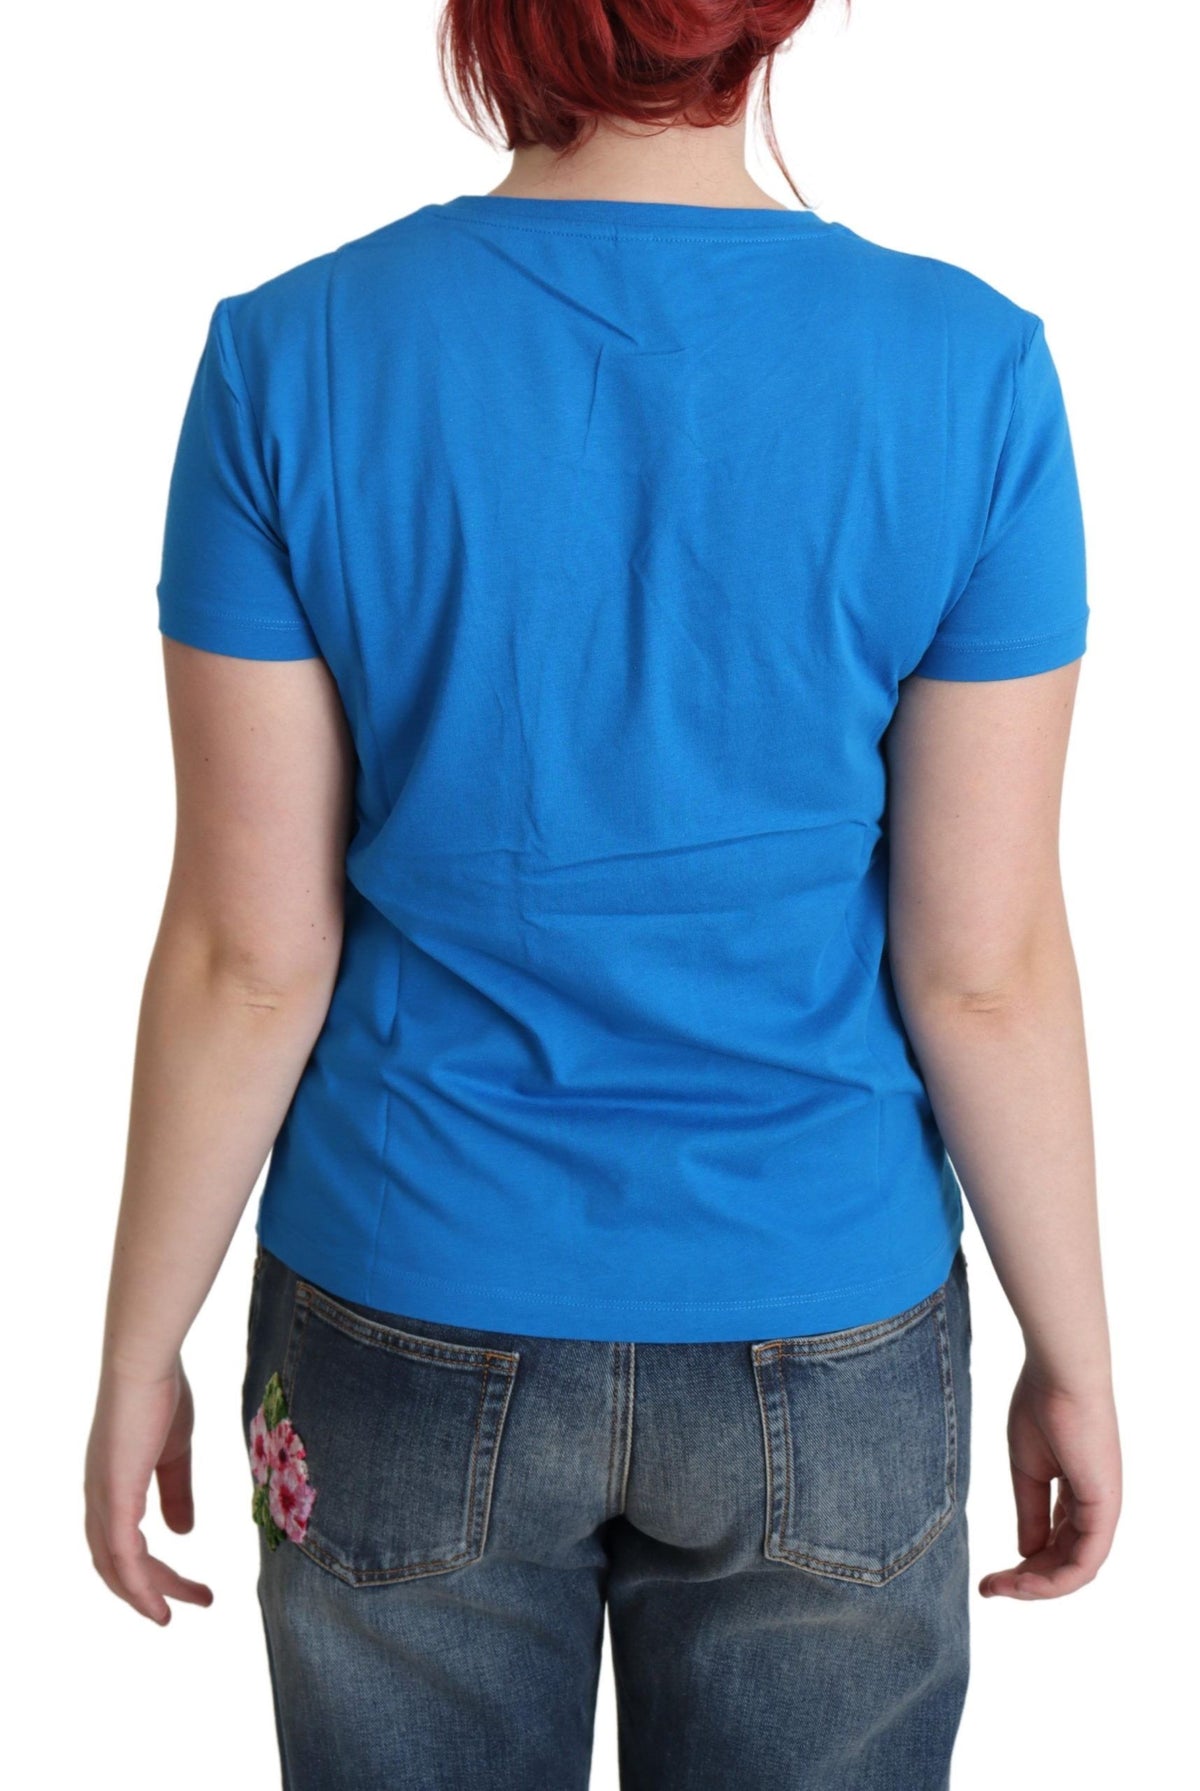 Moschino Chic – Blaues Baumwoll-T-Shirt mit ikonischem Print